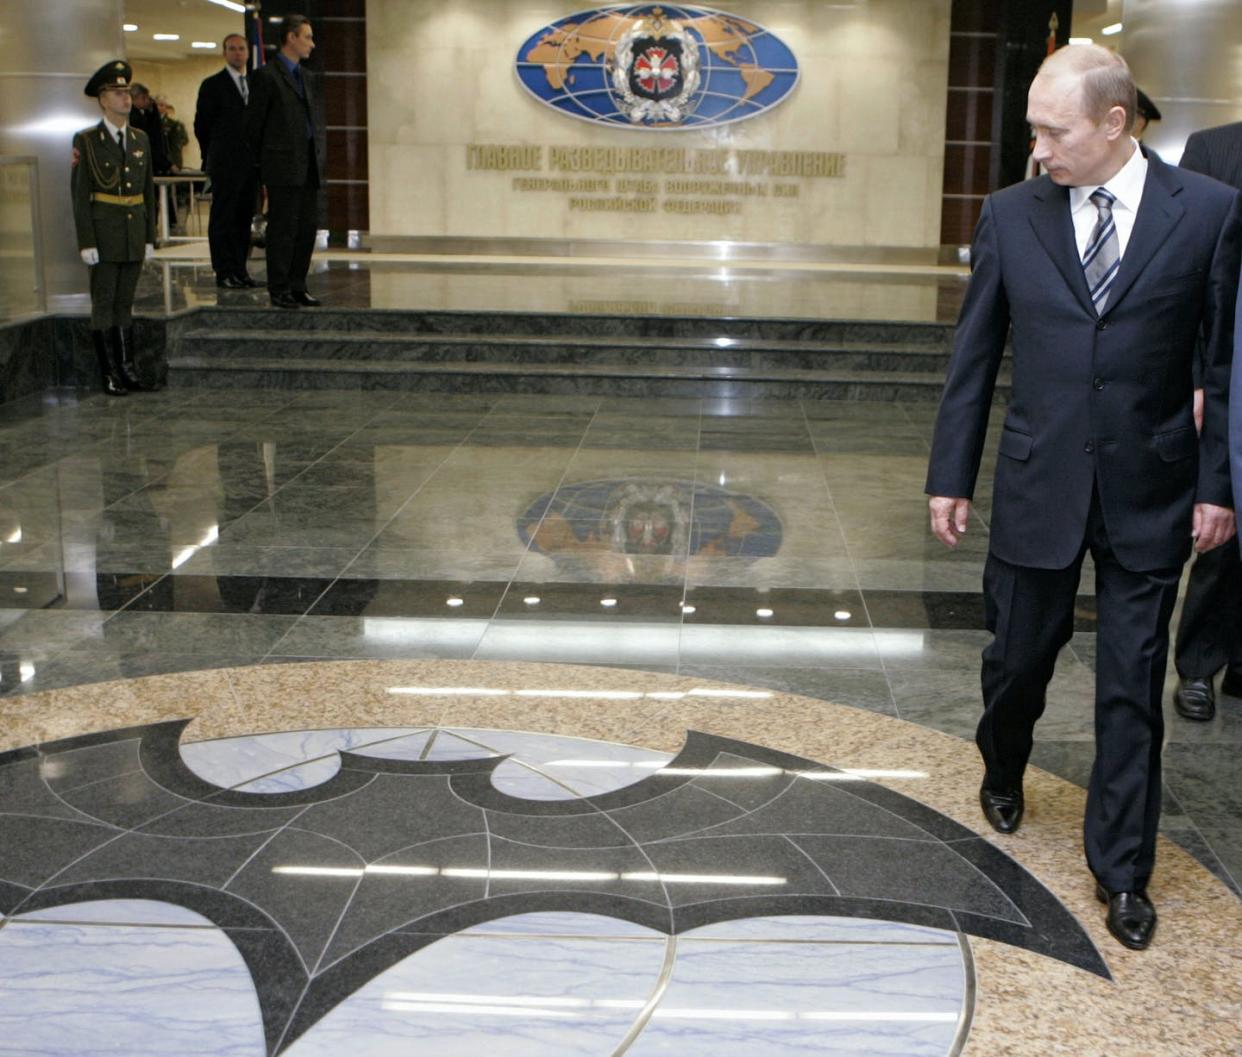 <span class="caption">Russian President Vladimir Putin walks through a hall in the building housing Russia's GRU military intelligence service.</span> <span class="attribution"><a class="link " href="https://newsroom.ap.org/detail/RussiaPoisonedSpyGRU/66d4b73d747e49d597e5a5c4aab14e2e/photo?Query=GRU%20Dmitry%20Astakhov&mediaType=photo&sortBy=arrivaldatetime:desc&dateRange=Anytime&totalCount=1&currentItemNo=0" rel="nofollow noopener" target="_blank" data-ylk="slk:Dmitry Astakhov, Sputnik, Government Pool Photo via AP;elm:context_link;itc:0;sec:content-canvas">Dmitry Astakhov, Sputnik, Government Pool Photo via AP</a></span>